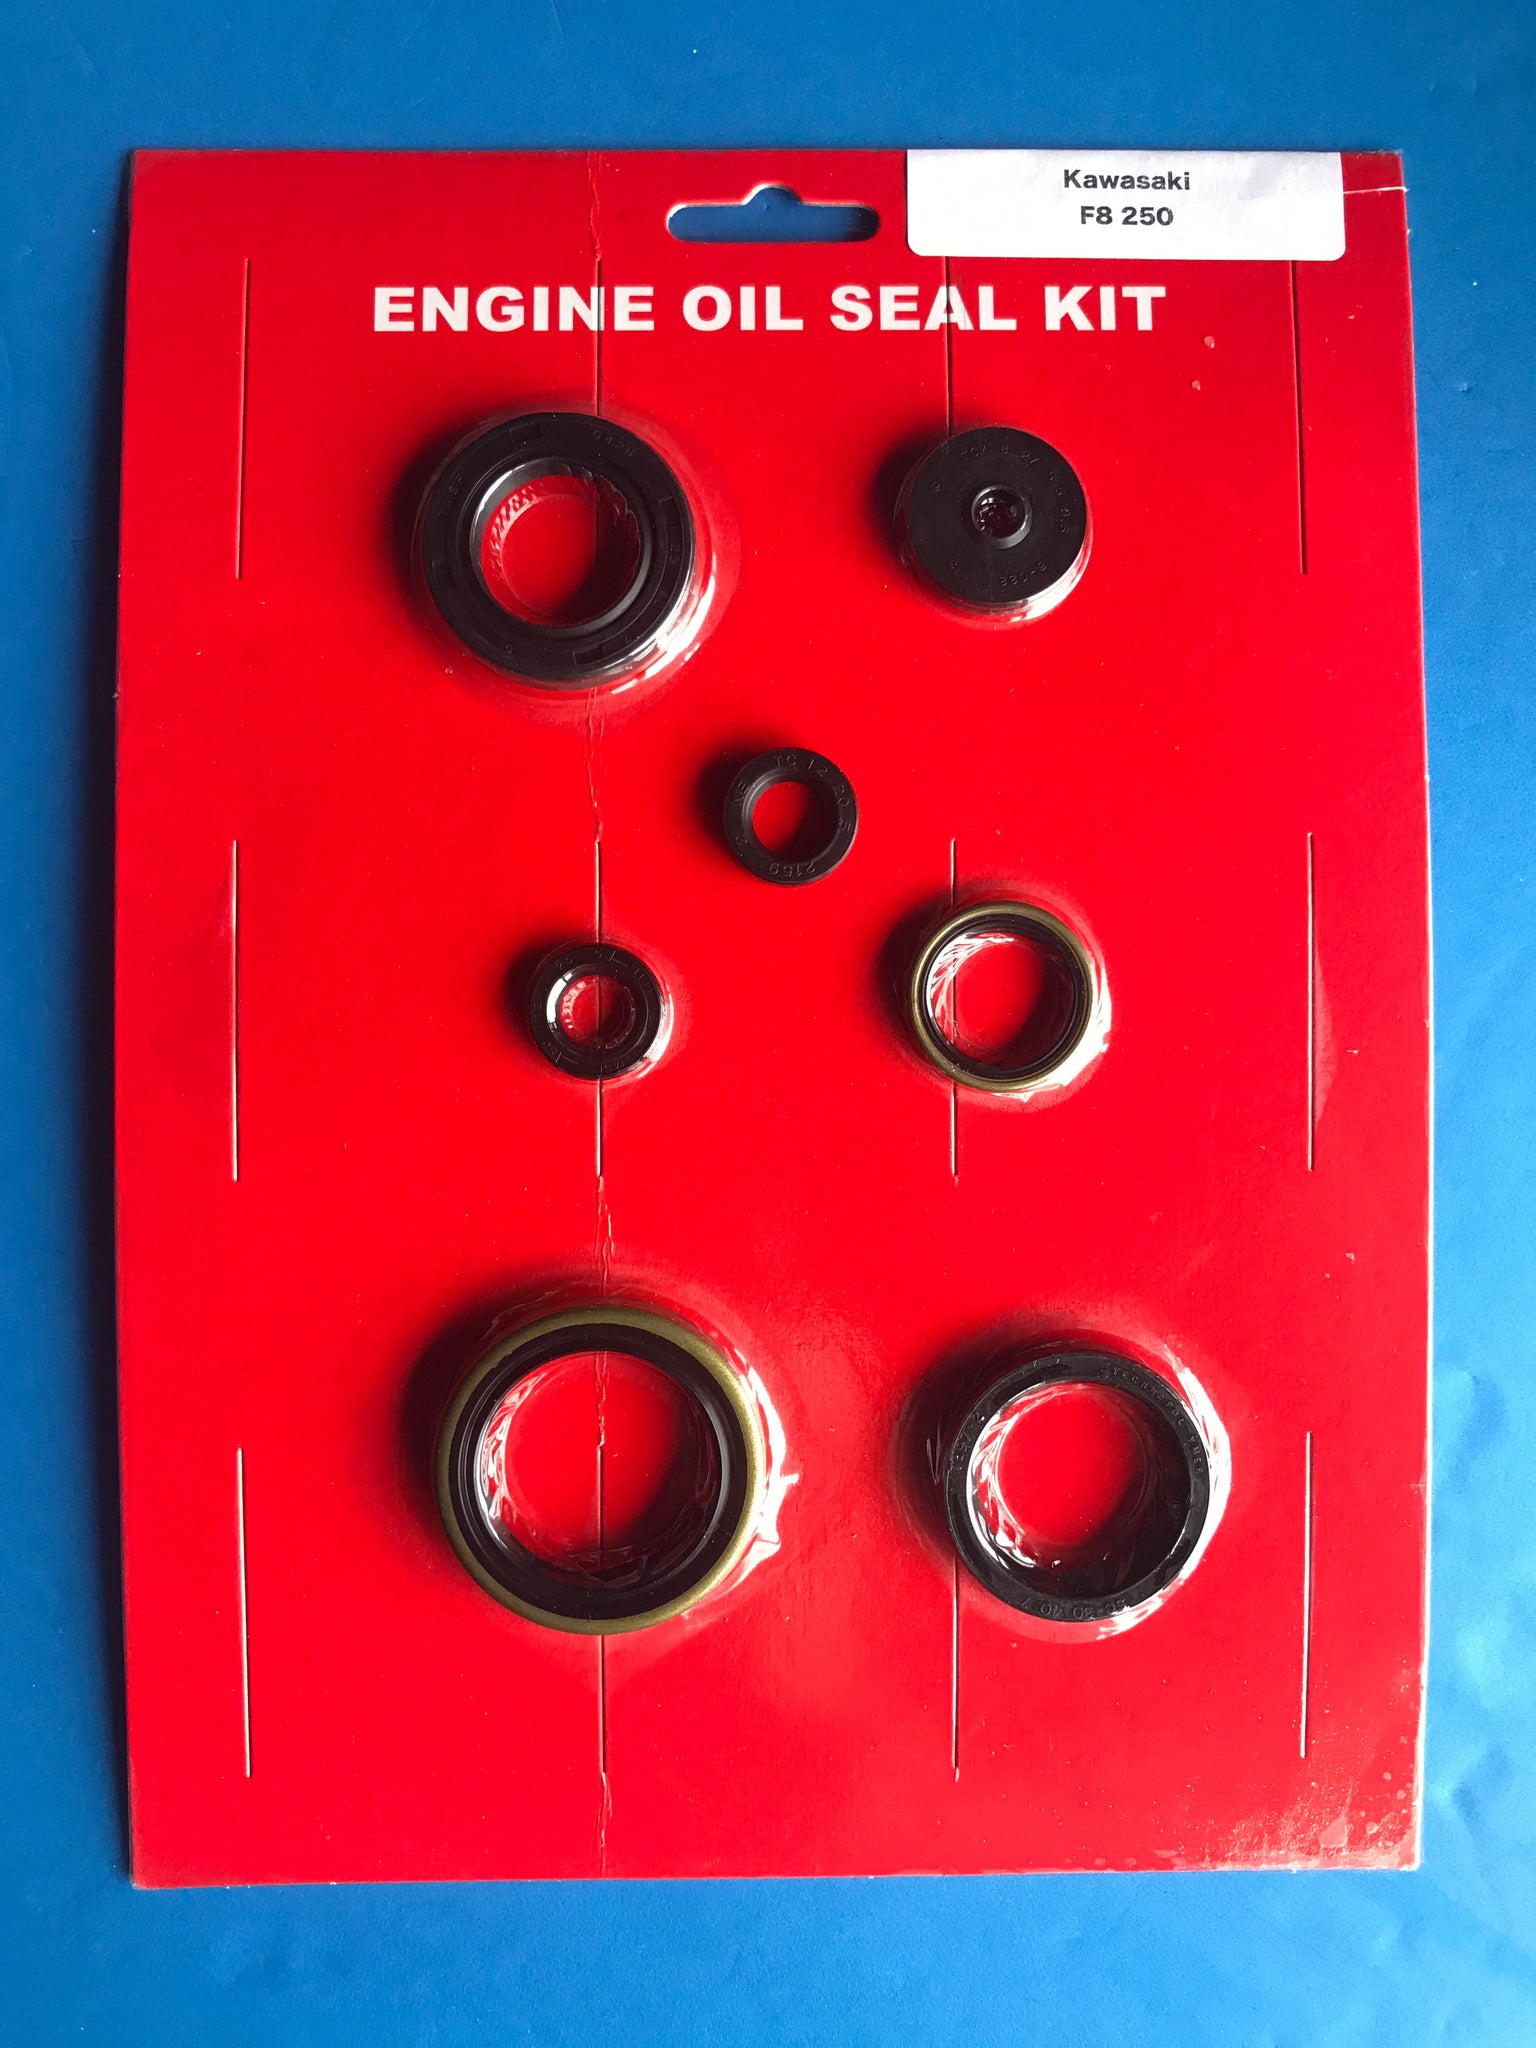 Kawasaki F8 Engine Oil Seal Kit Bison 250 1971 1972 Crank Clutch Kick Shift Seal+